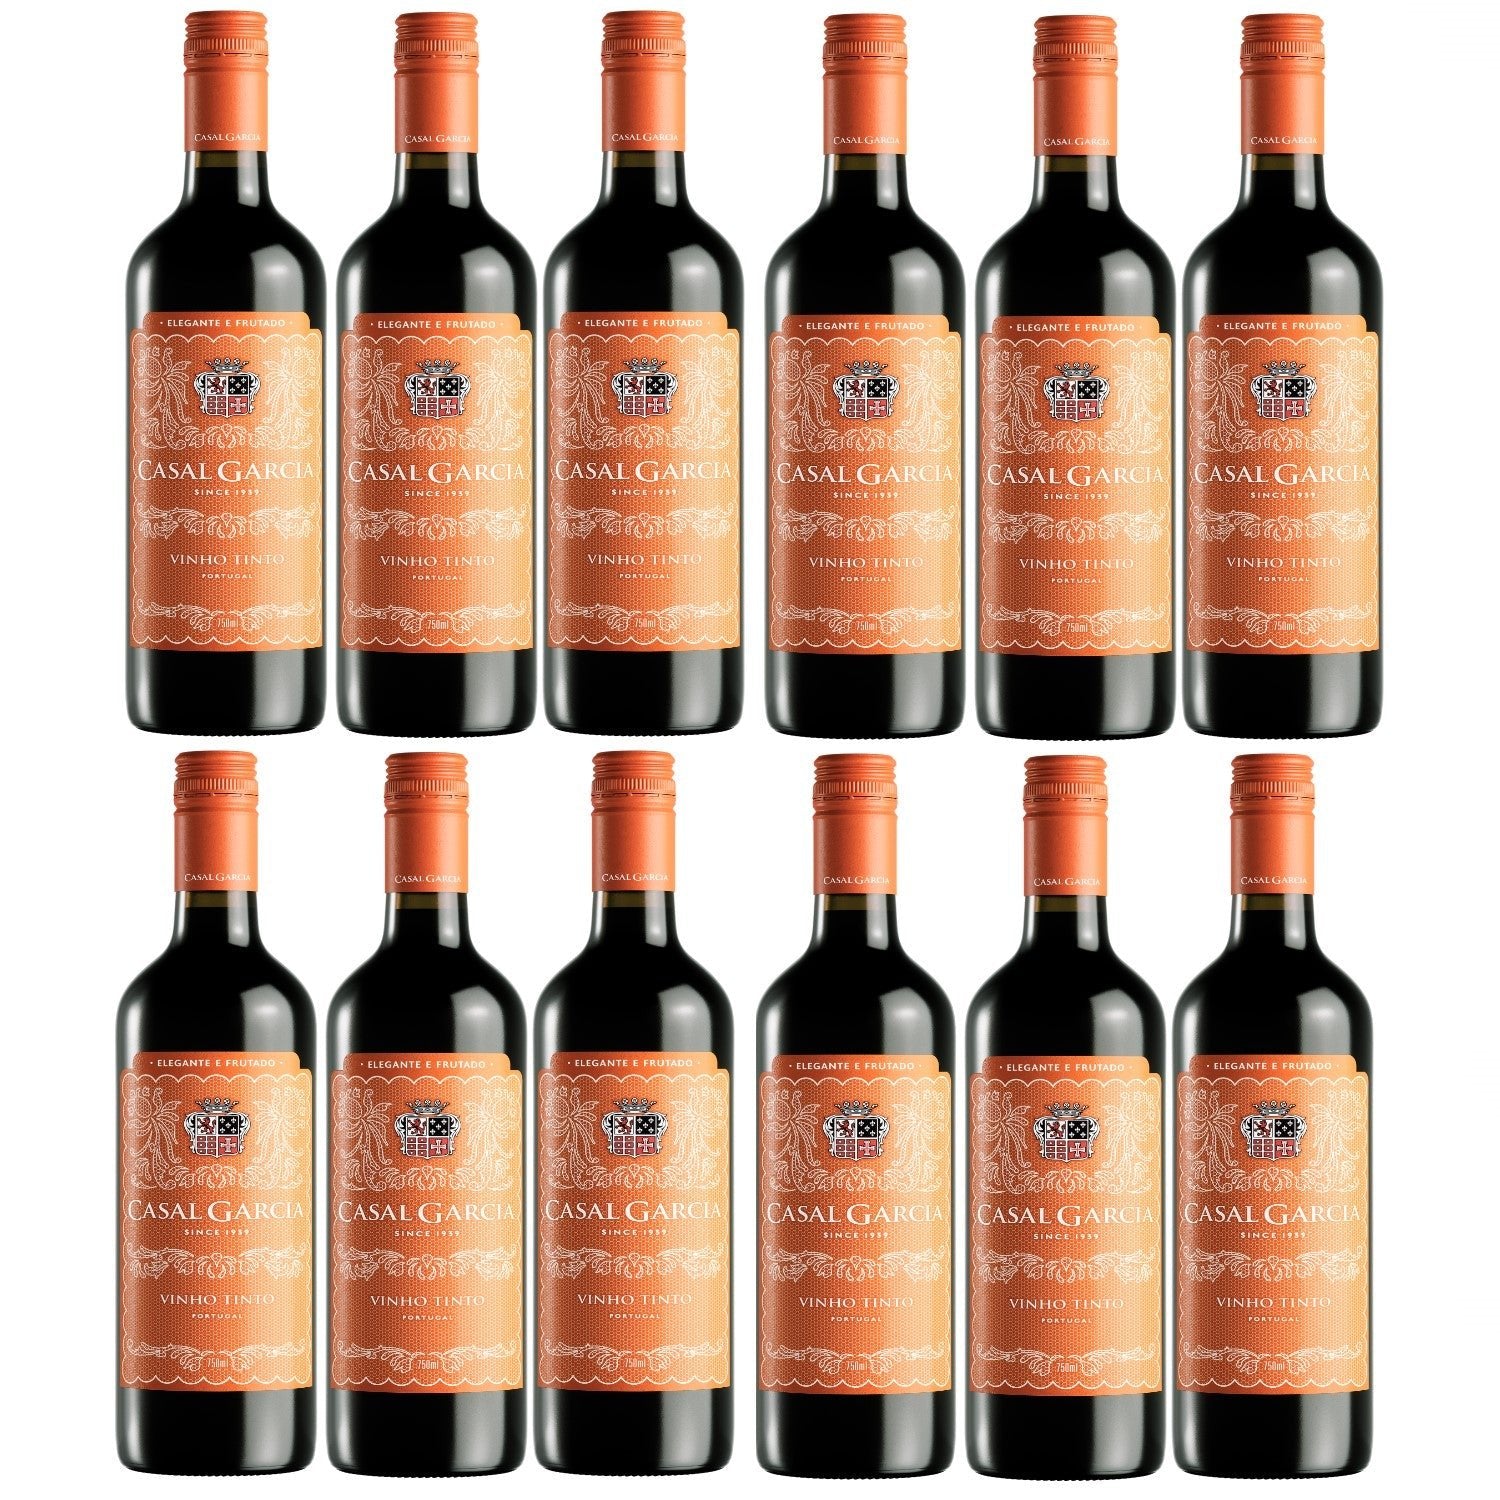 Casal Garcia Vinho Tinto IG Lisboa Rotwein Wein trocken Portugal (12 x 0.75l) - Versanel -